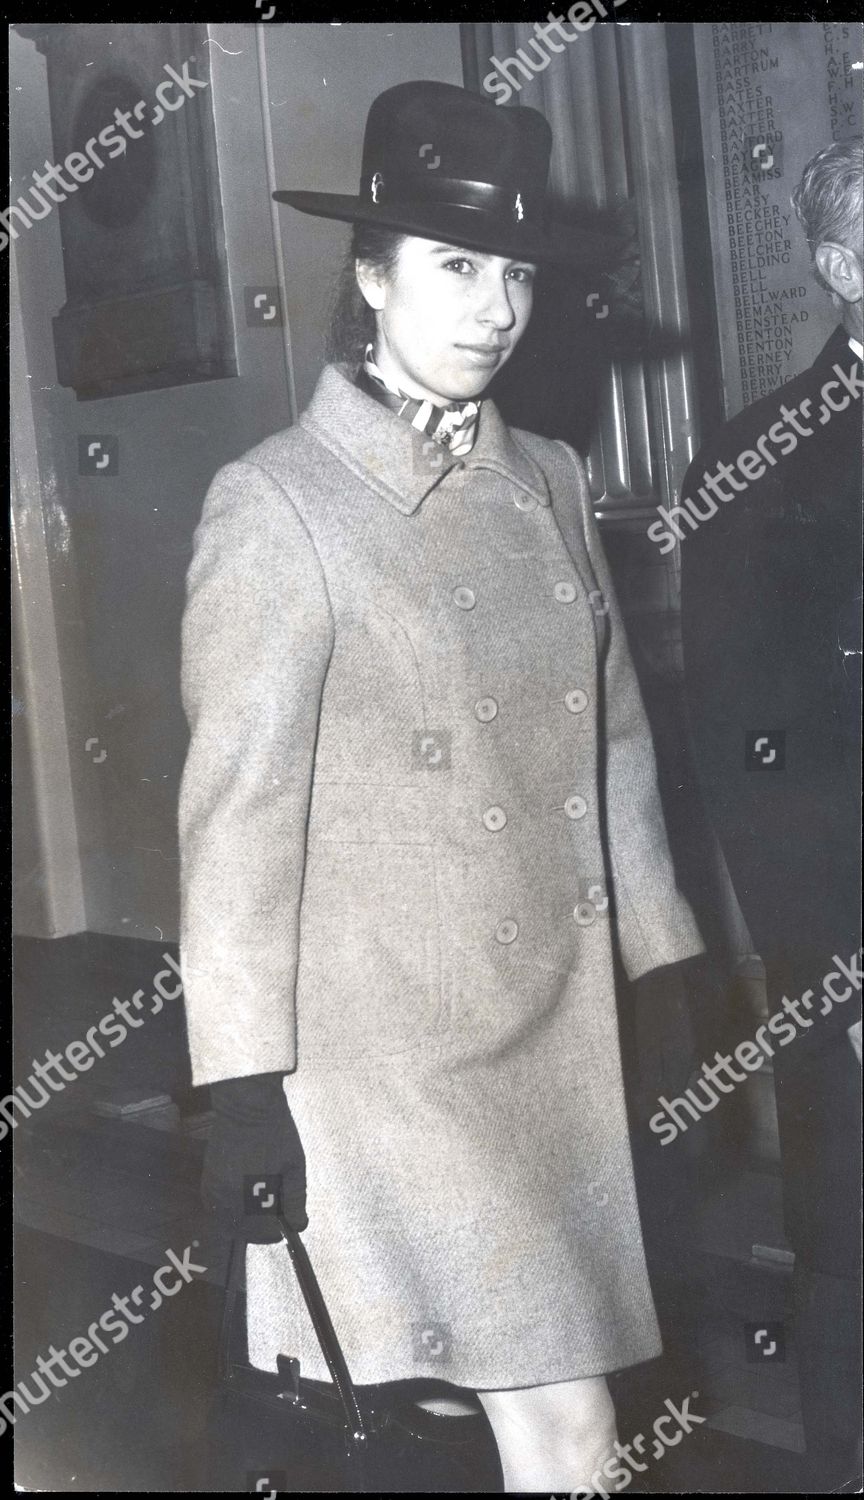 princess-anne-now-princess-royal-december-1970-princess-anne-leave-for-sandringham-royalty-shutterstock-editorial-896286a.jpg